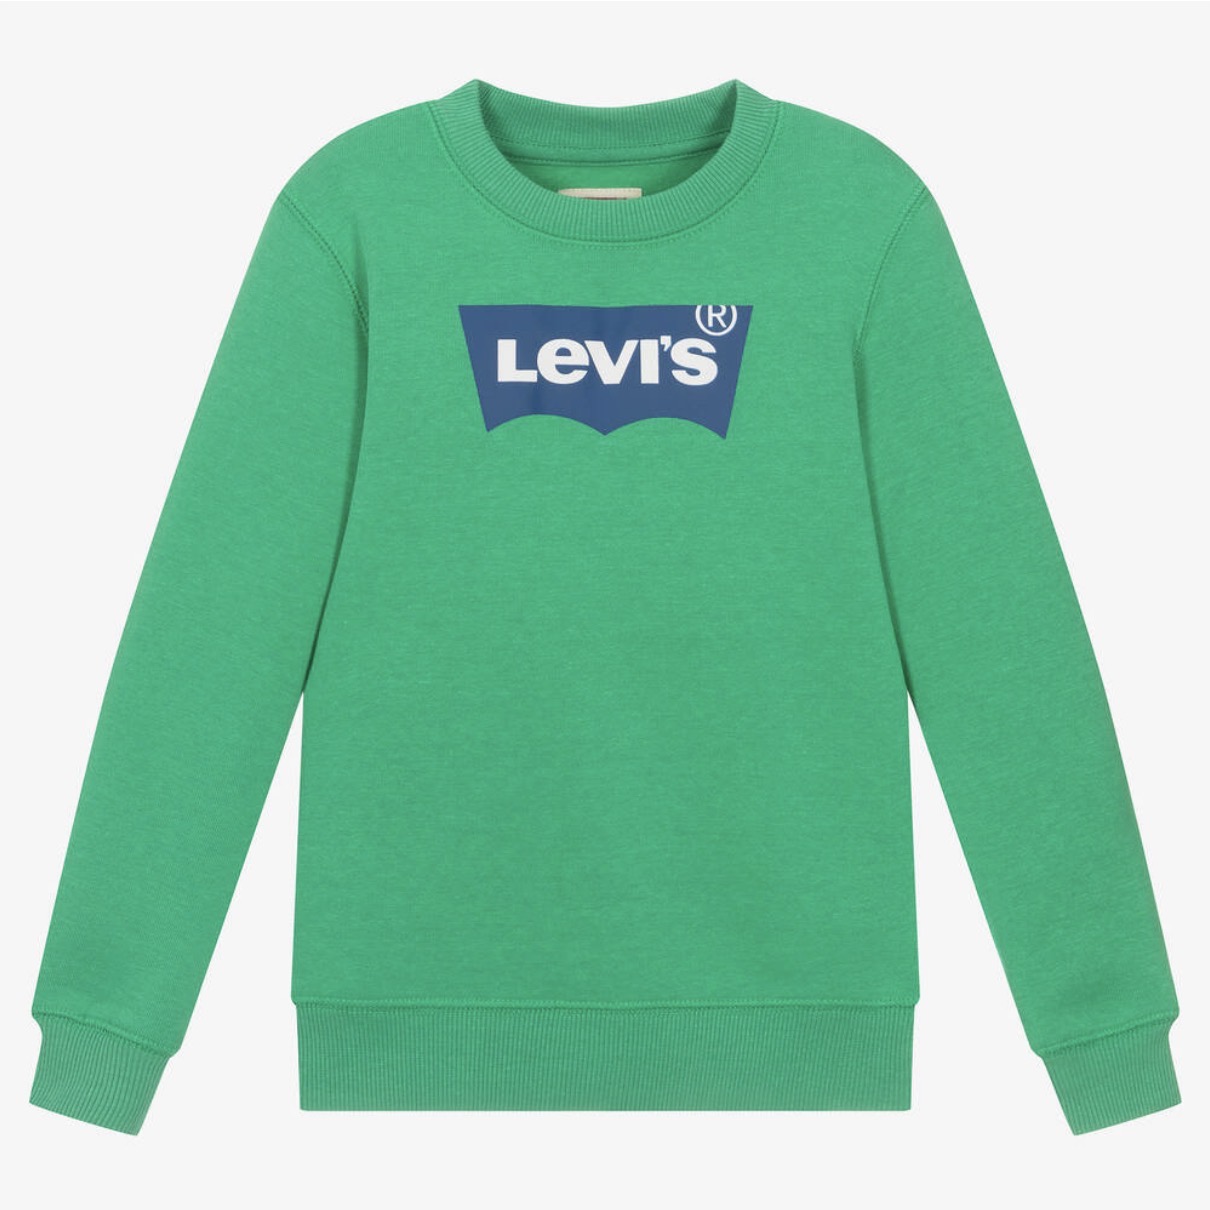 Levis Batwing Crew Sweatshirt 9E9079-E1q Green Clothing 10YRS / Green,12YRS / Green,14YRS / Green,16YRS / Green